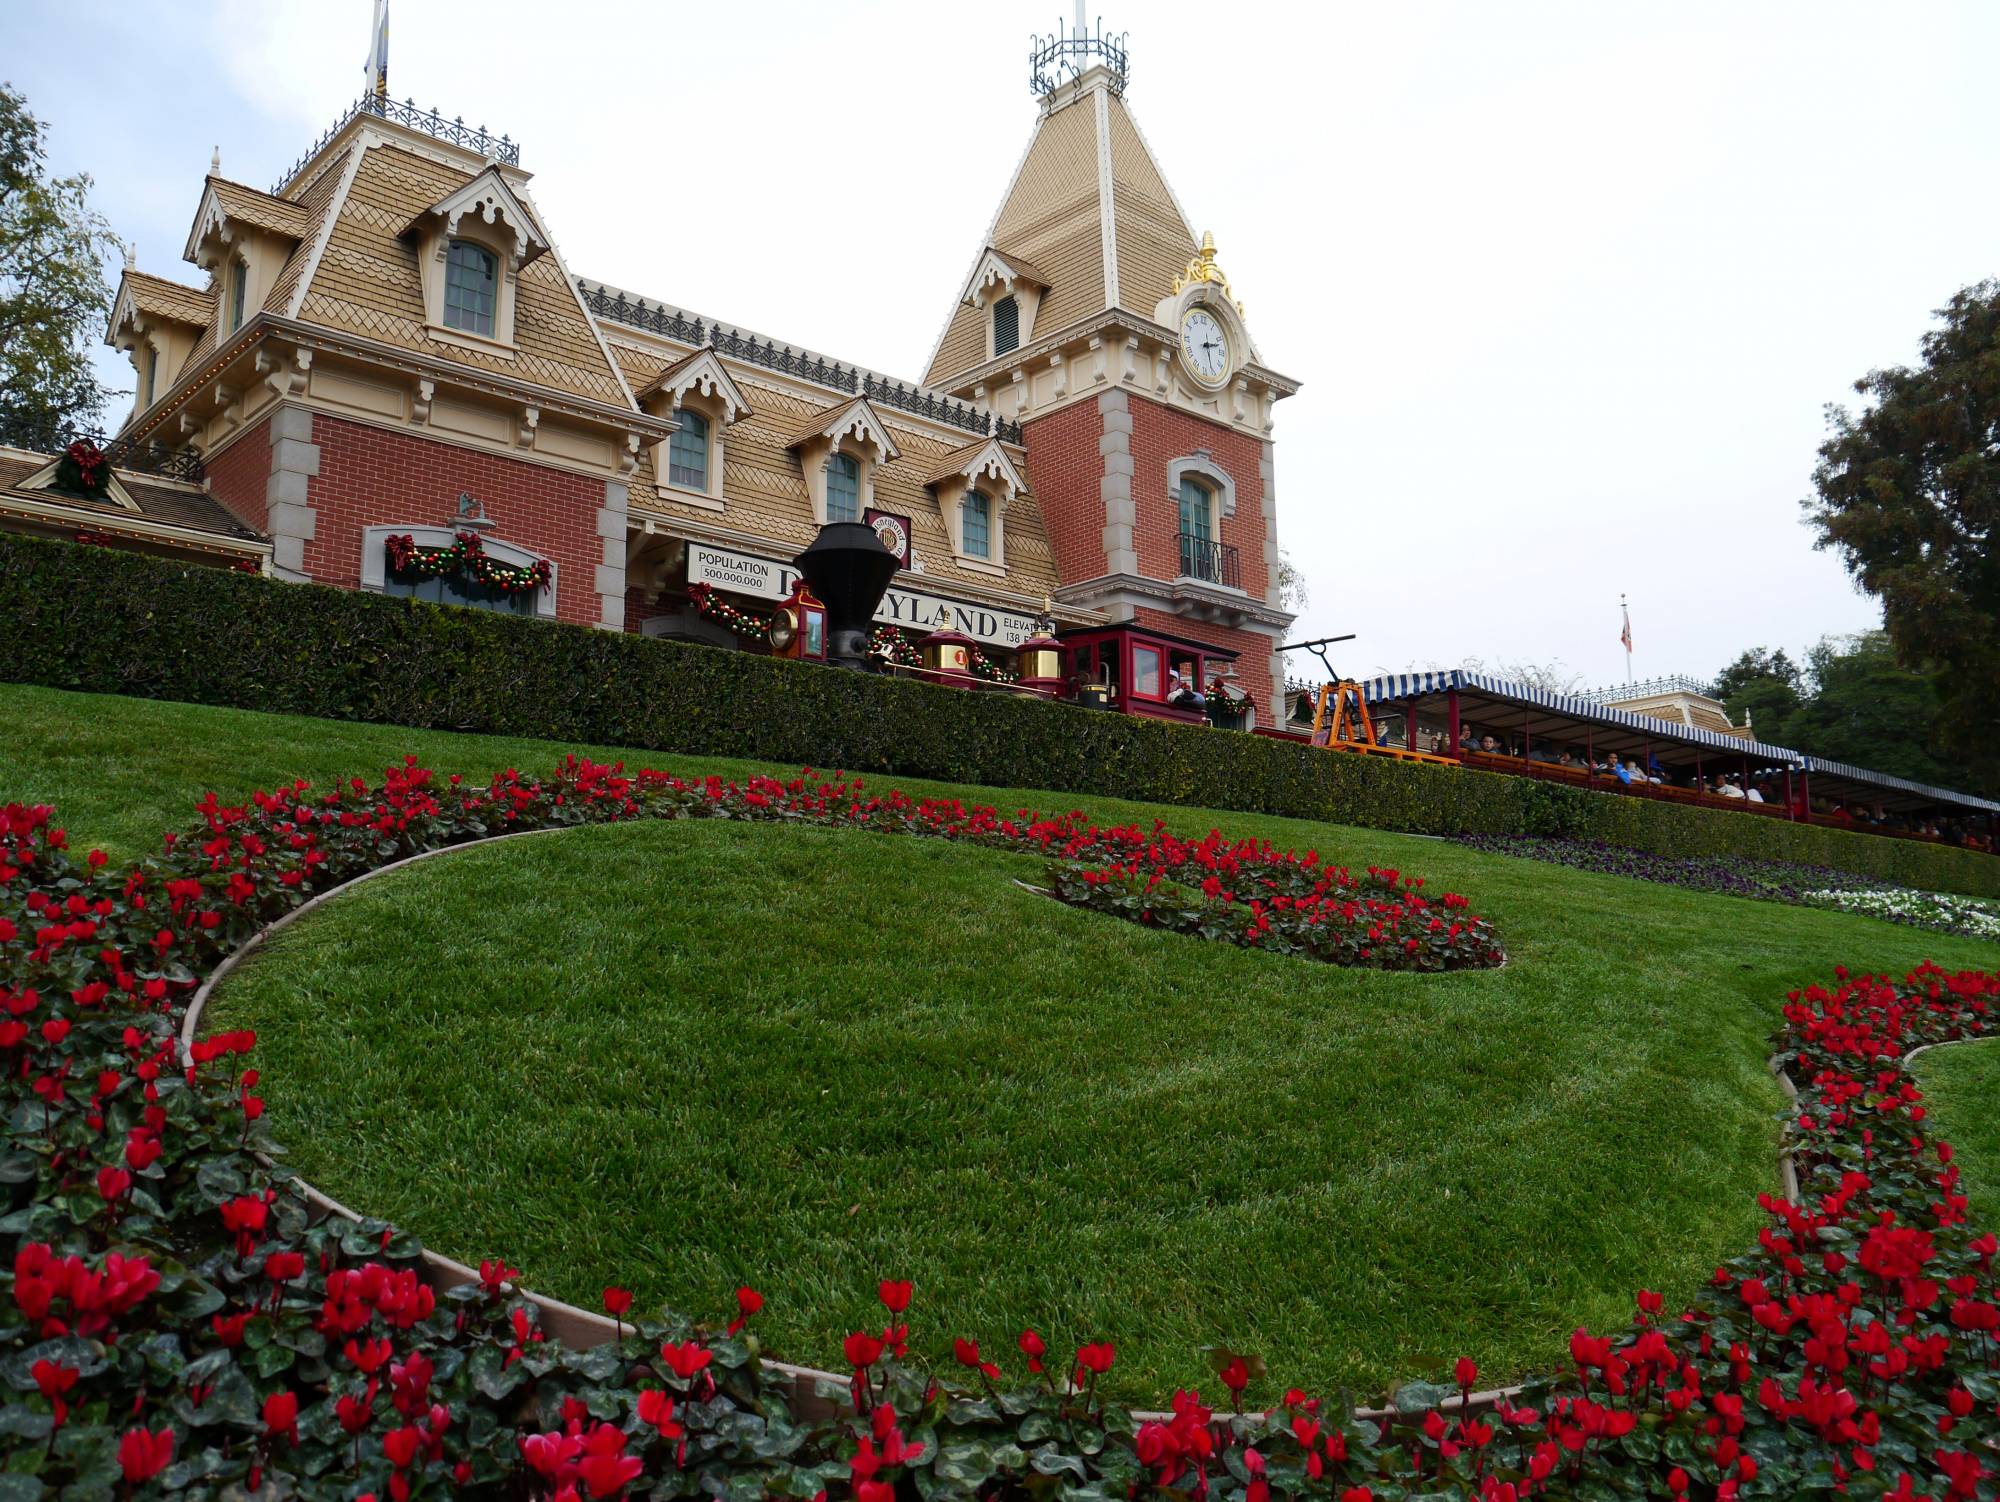 Disneyland Park - entrance